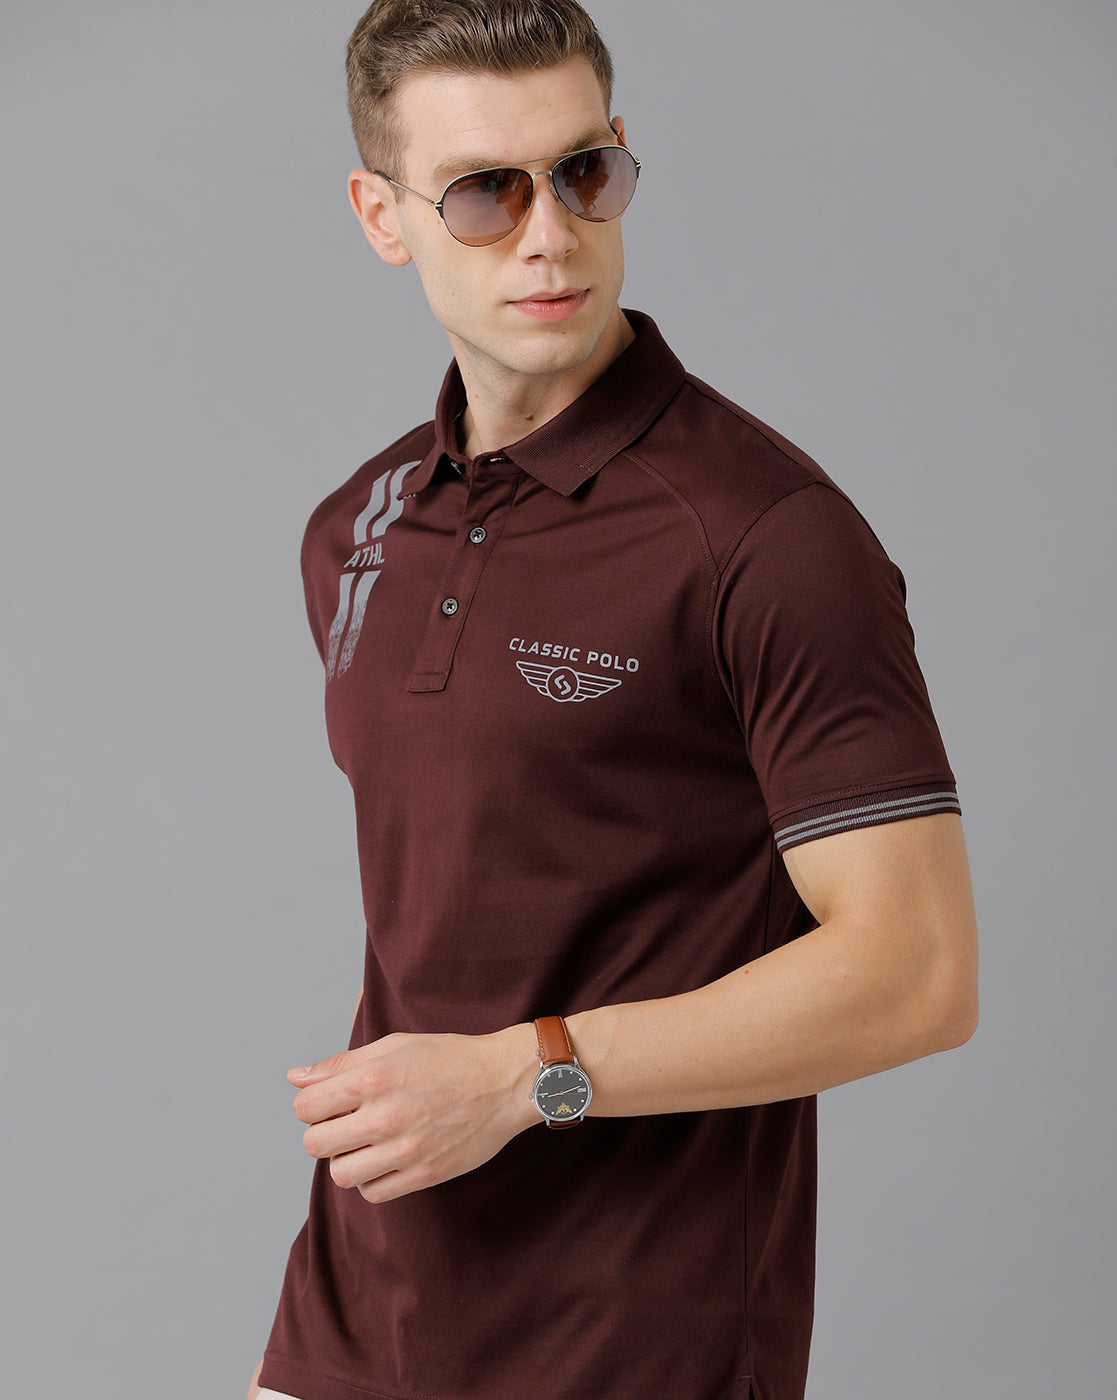 Classic Polo Men's Cotton Printed Slim Fit Brown T-Shirt | Prm - 738 A